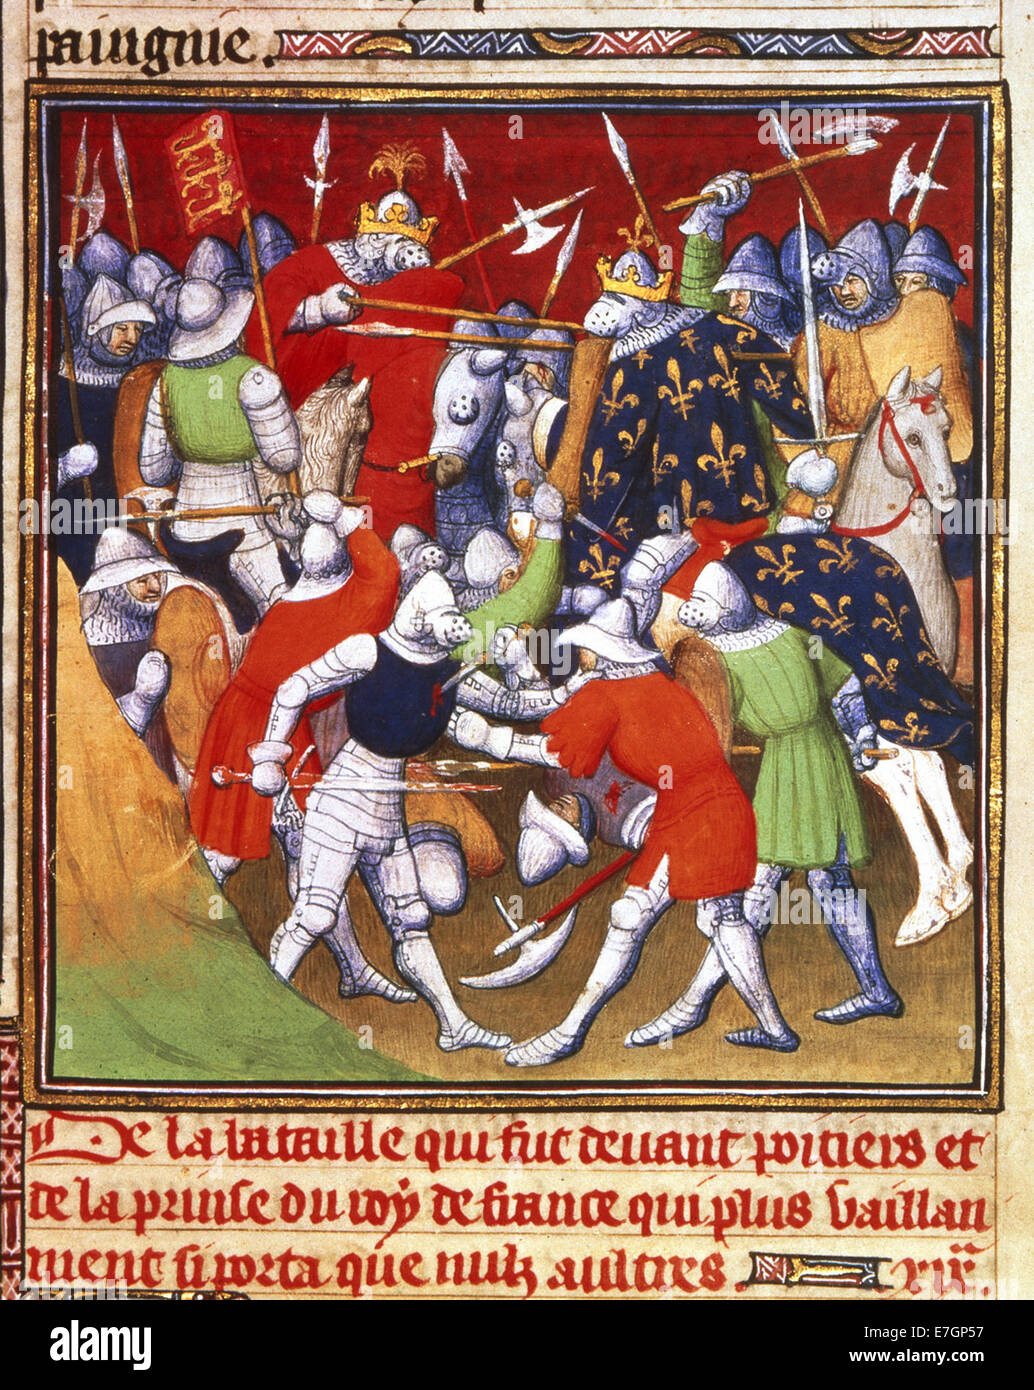 Battle of Poitiers - Grandes Chroniques de France (c.1415), f.166 - BL Cotton MS Nero E II Stock Photo